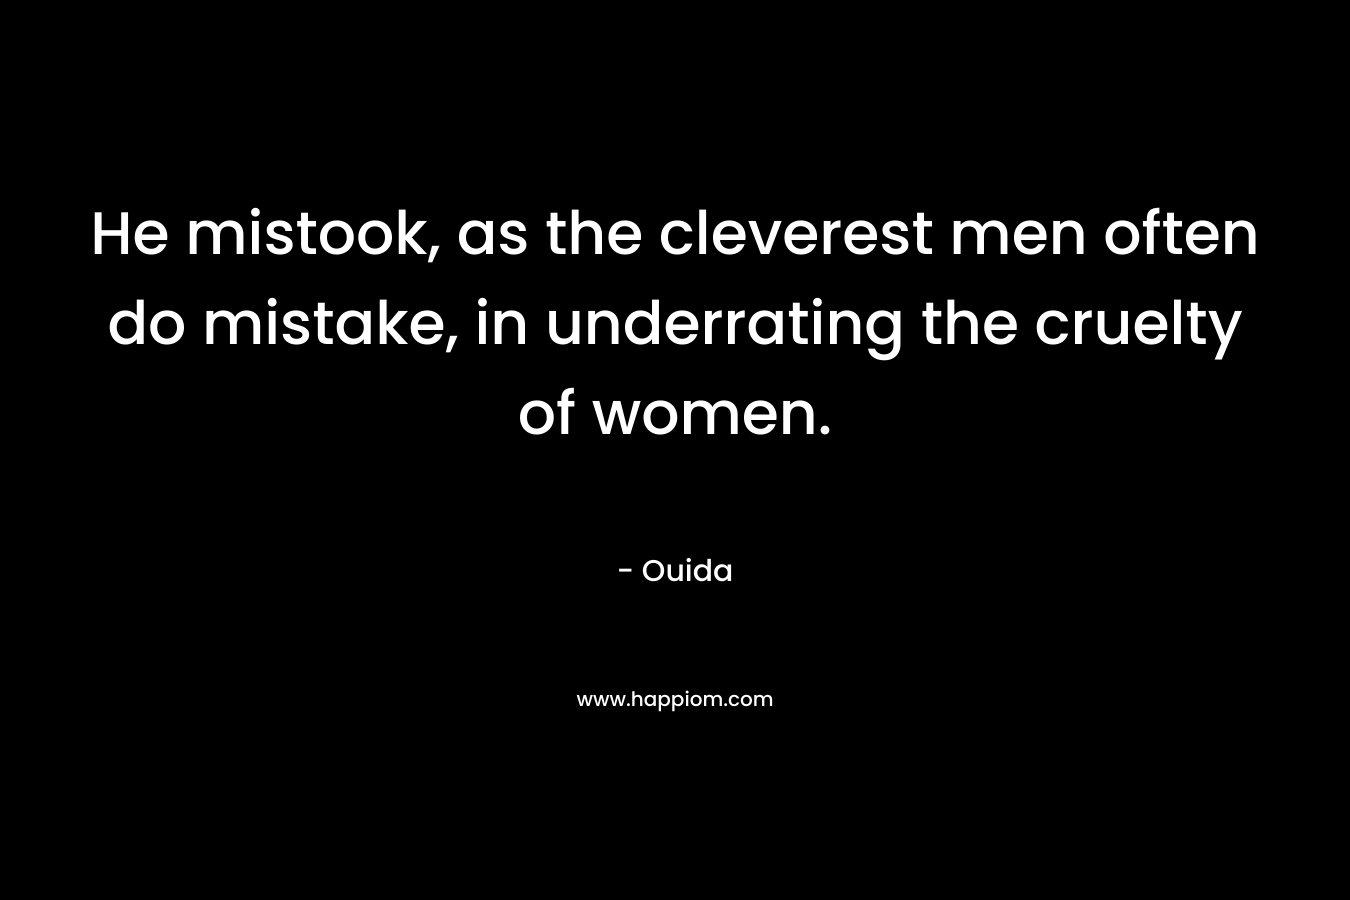 He mistook, as the cleverest men often do mistake, in underrating the cruelty of women.